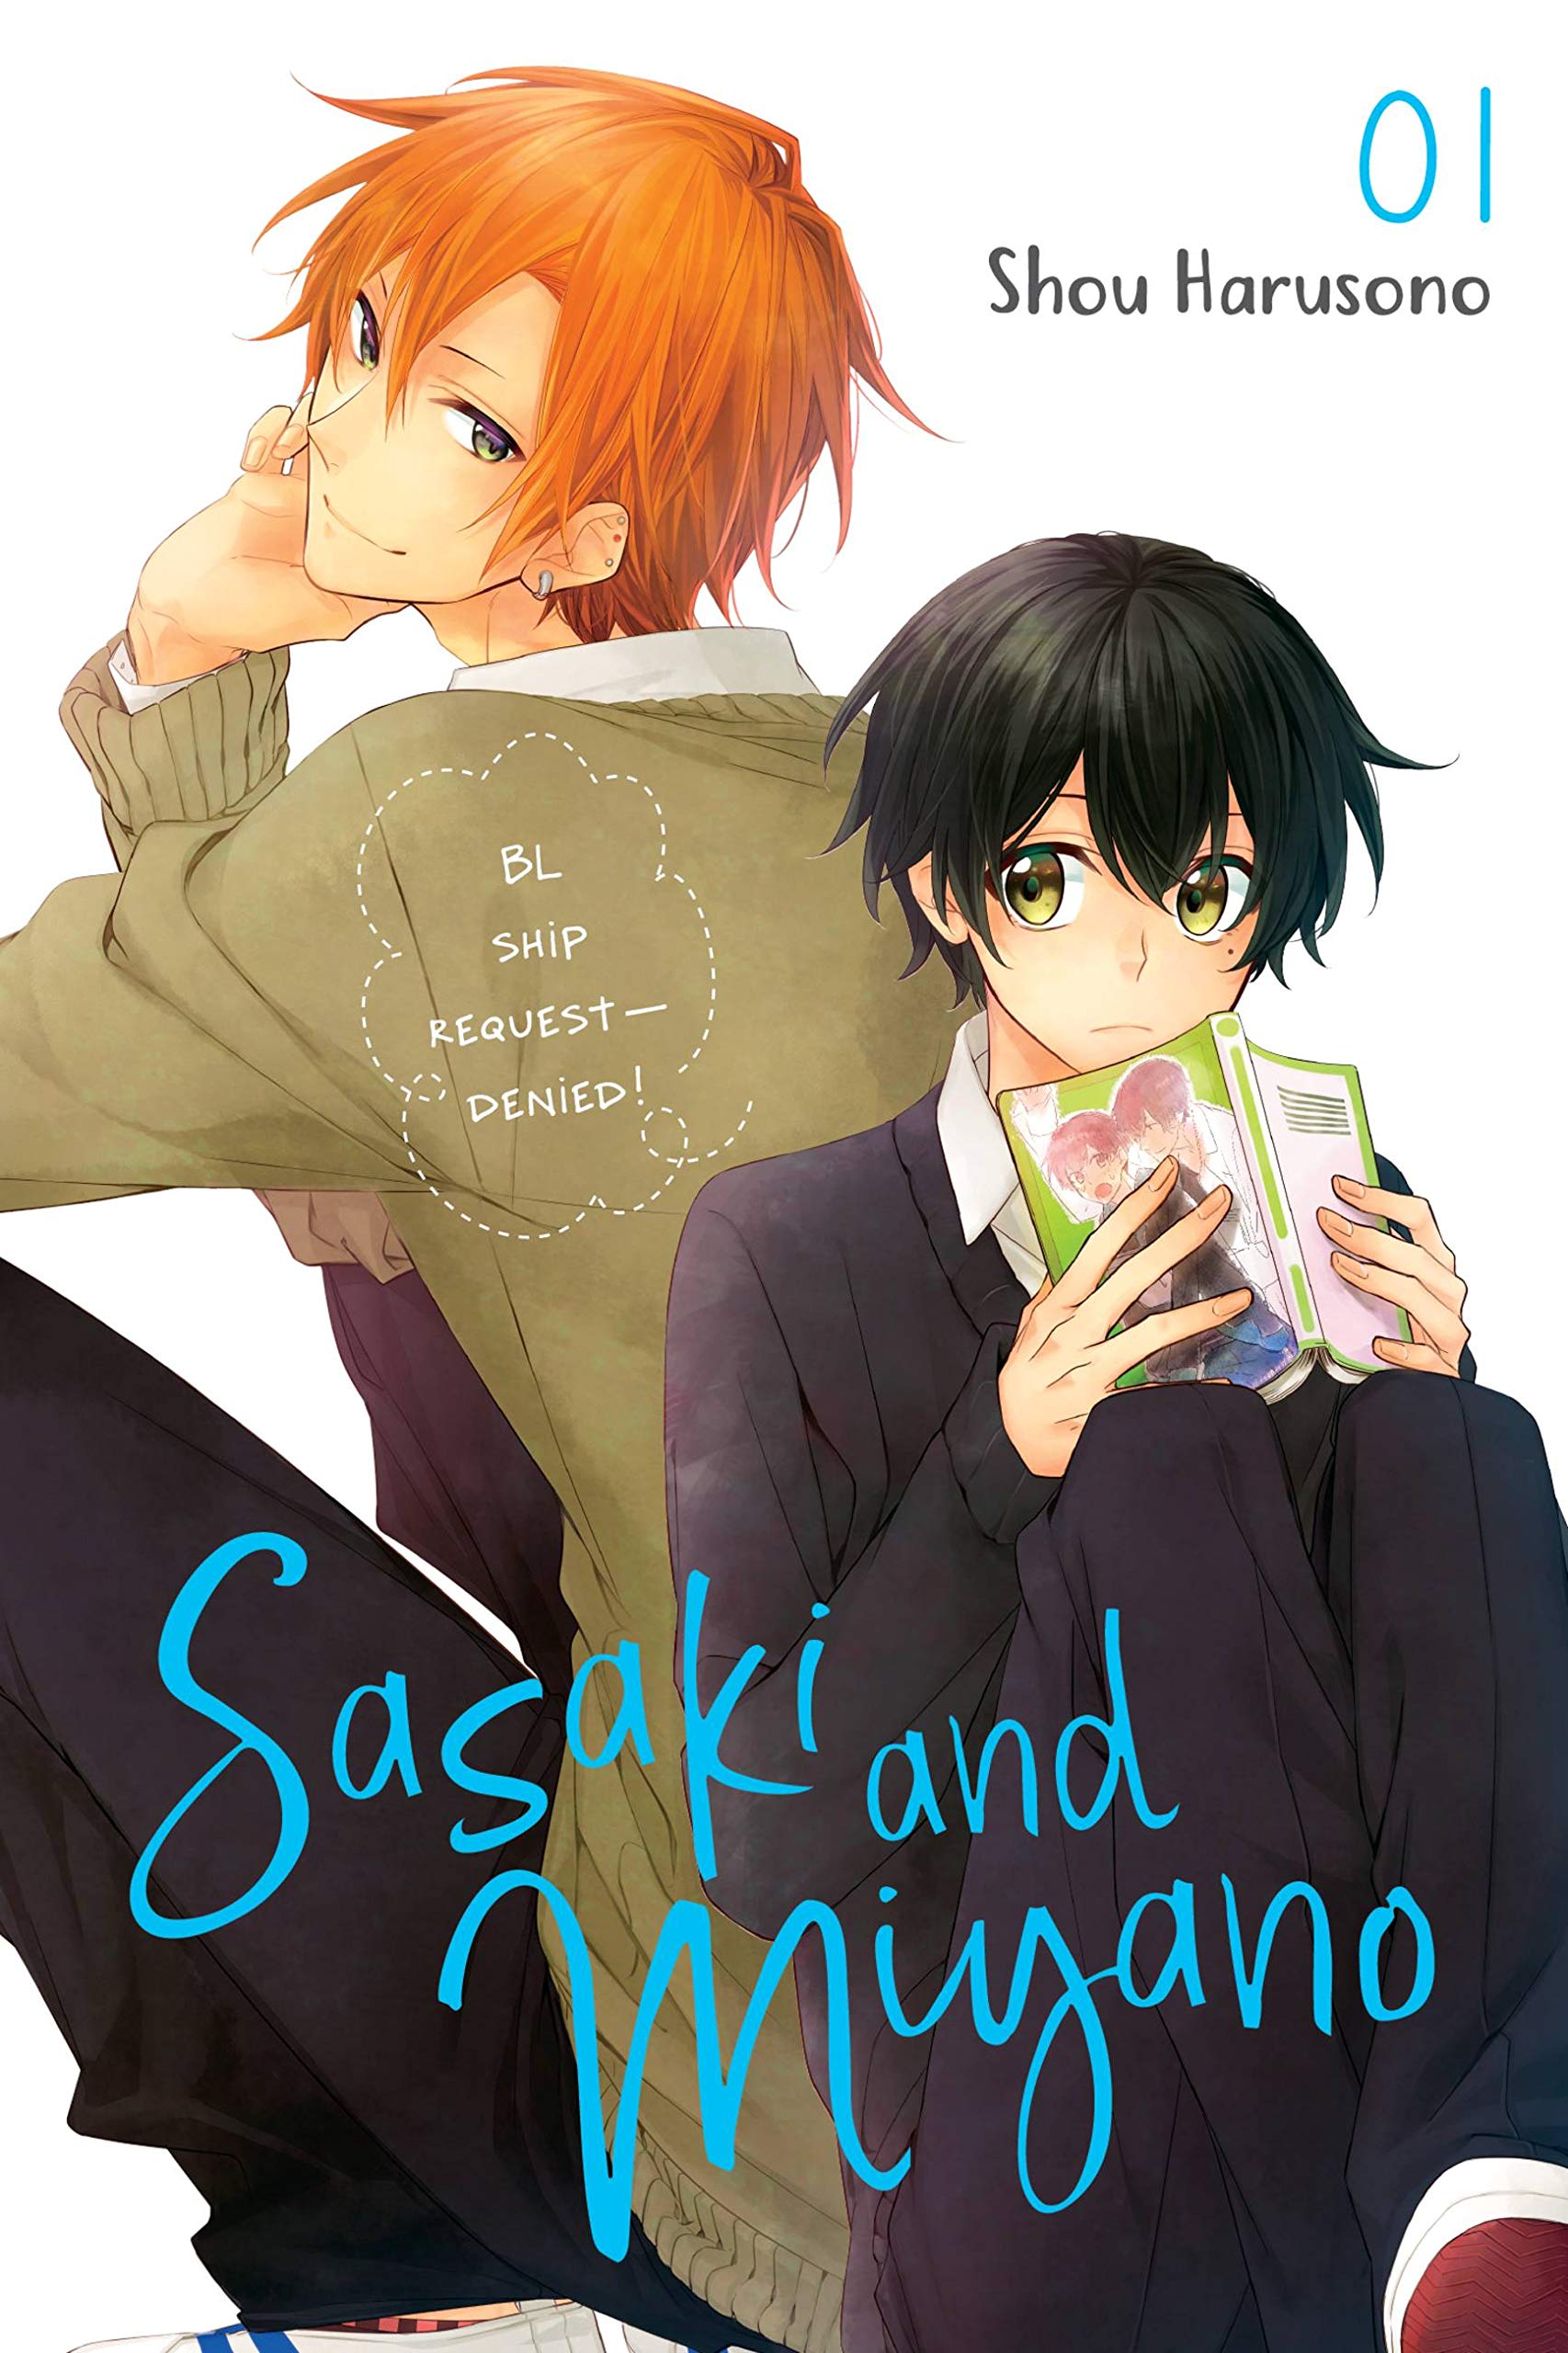 Sasaki and Miyano - Anime Review